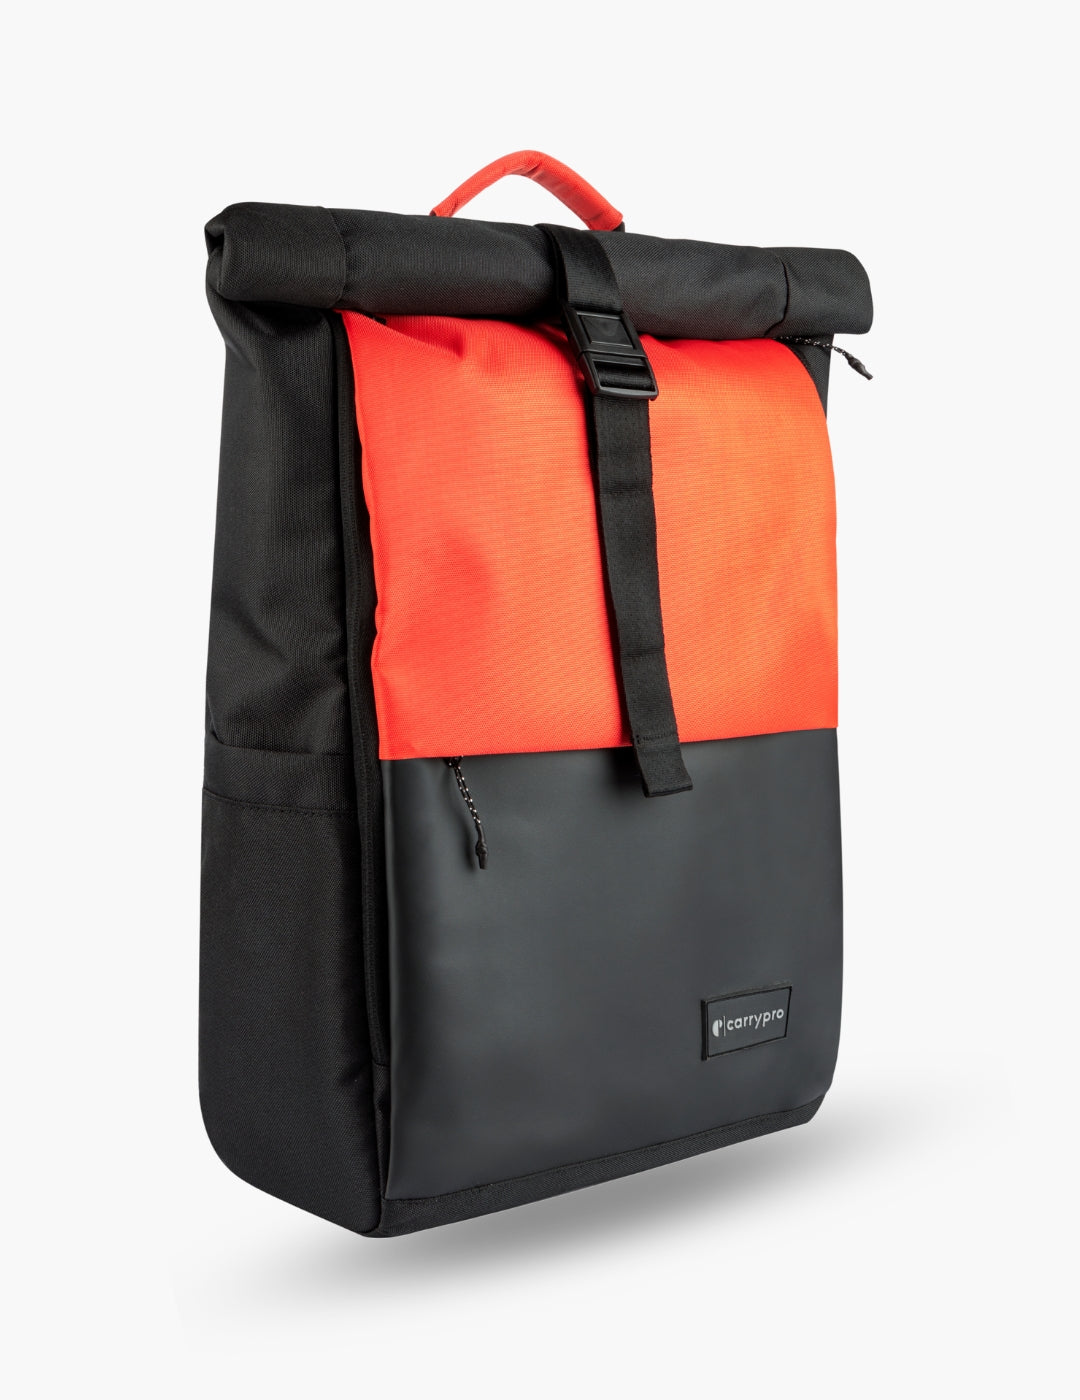 URBX Urban Exploration Laptop Backpack(New)